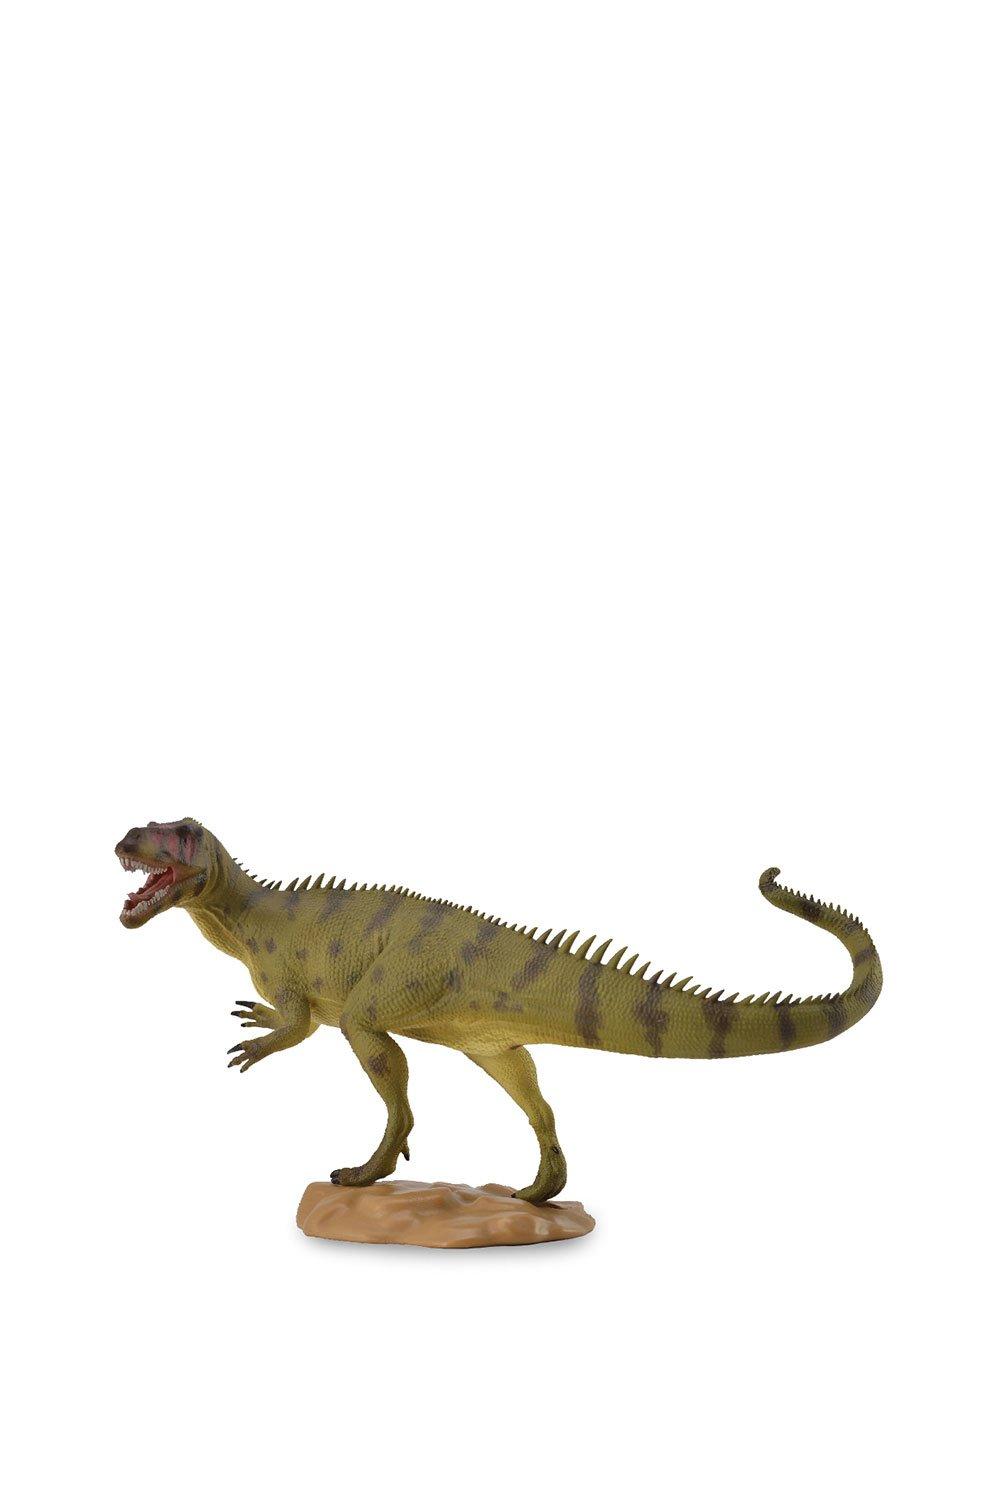 Torvosaurus Dinosaur Toy with Movable Jaw